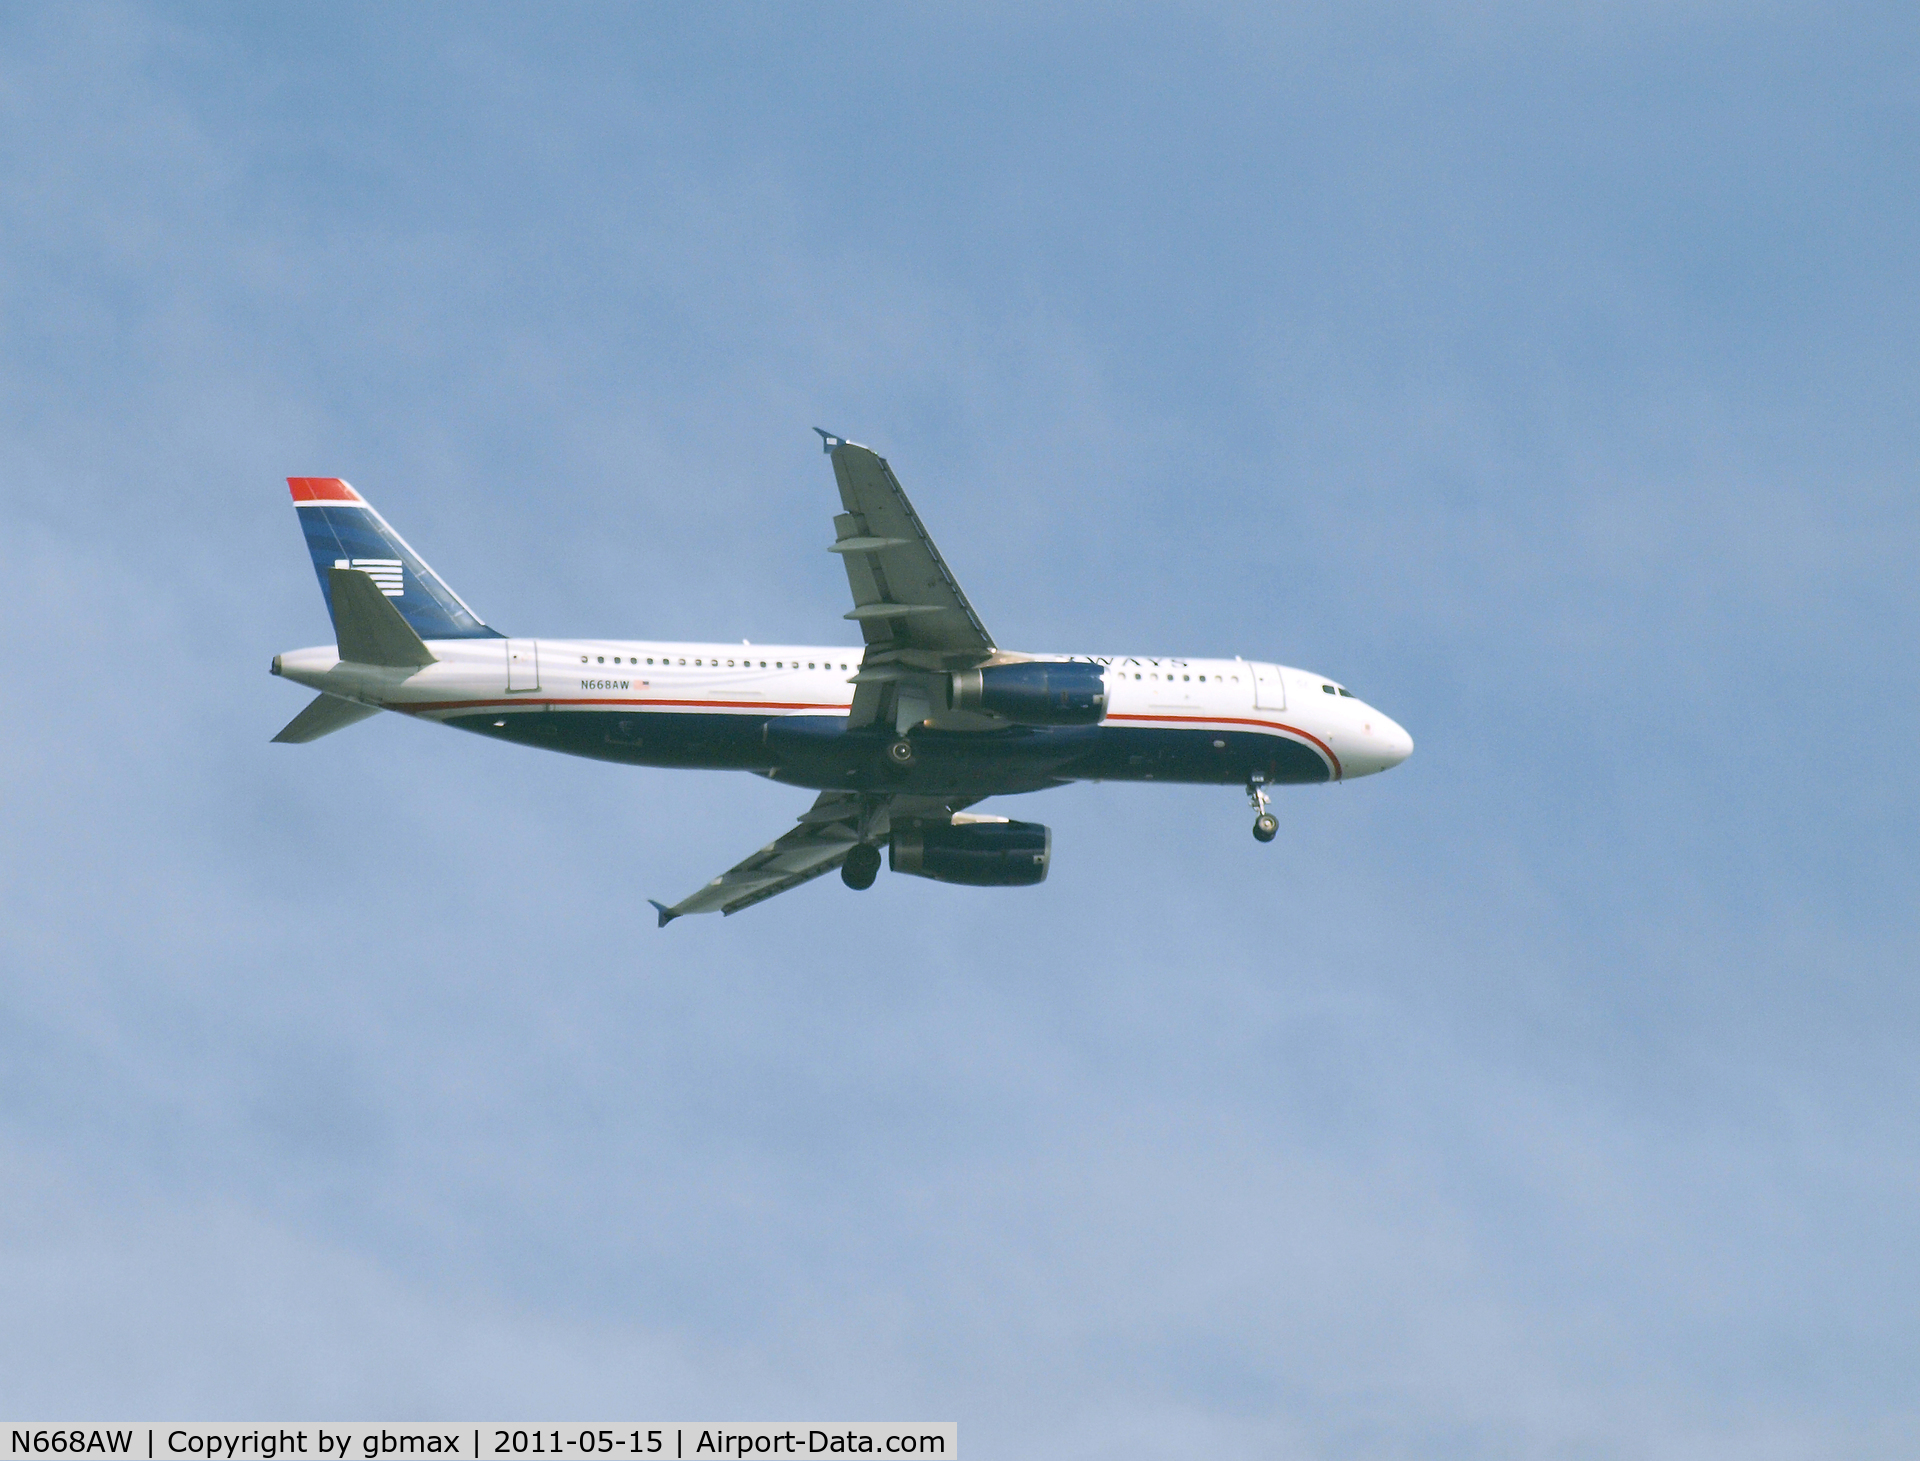 N668AW, 2002 Airbus A320-232 C/N 1764, Going to a landing at JFK